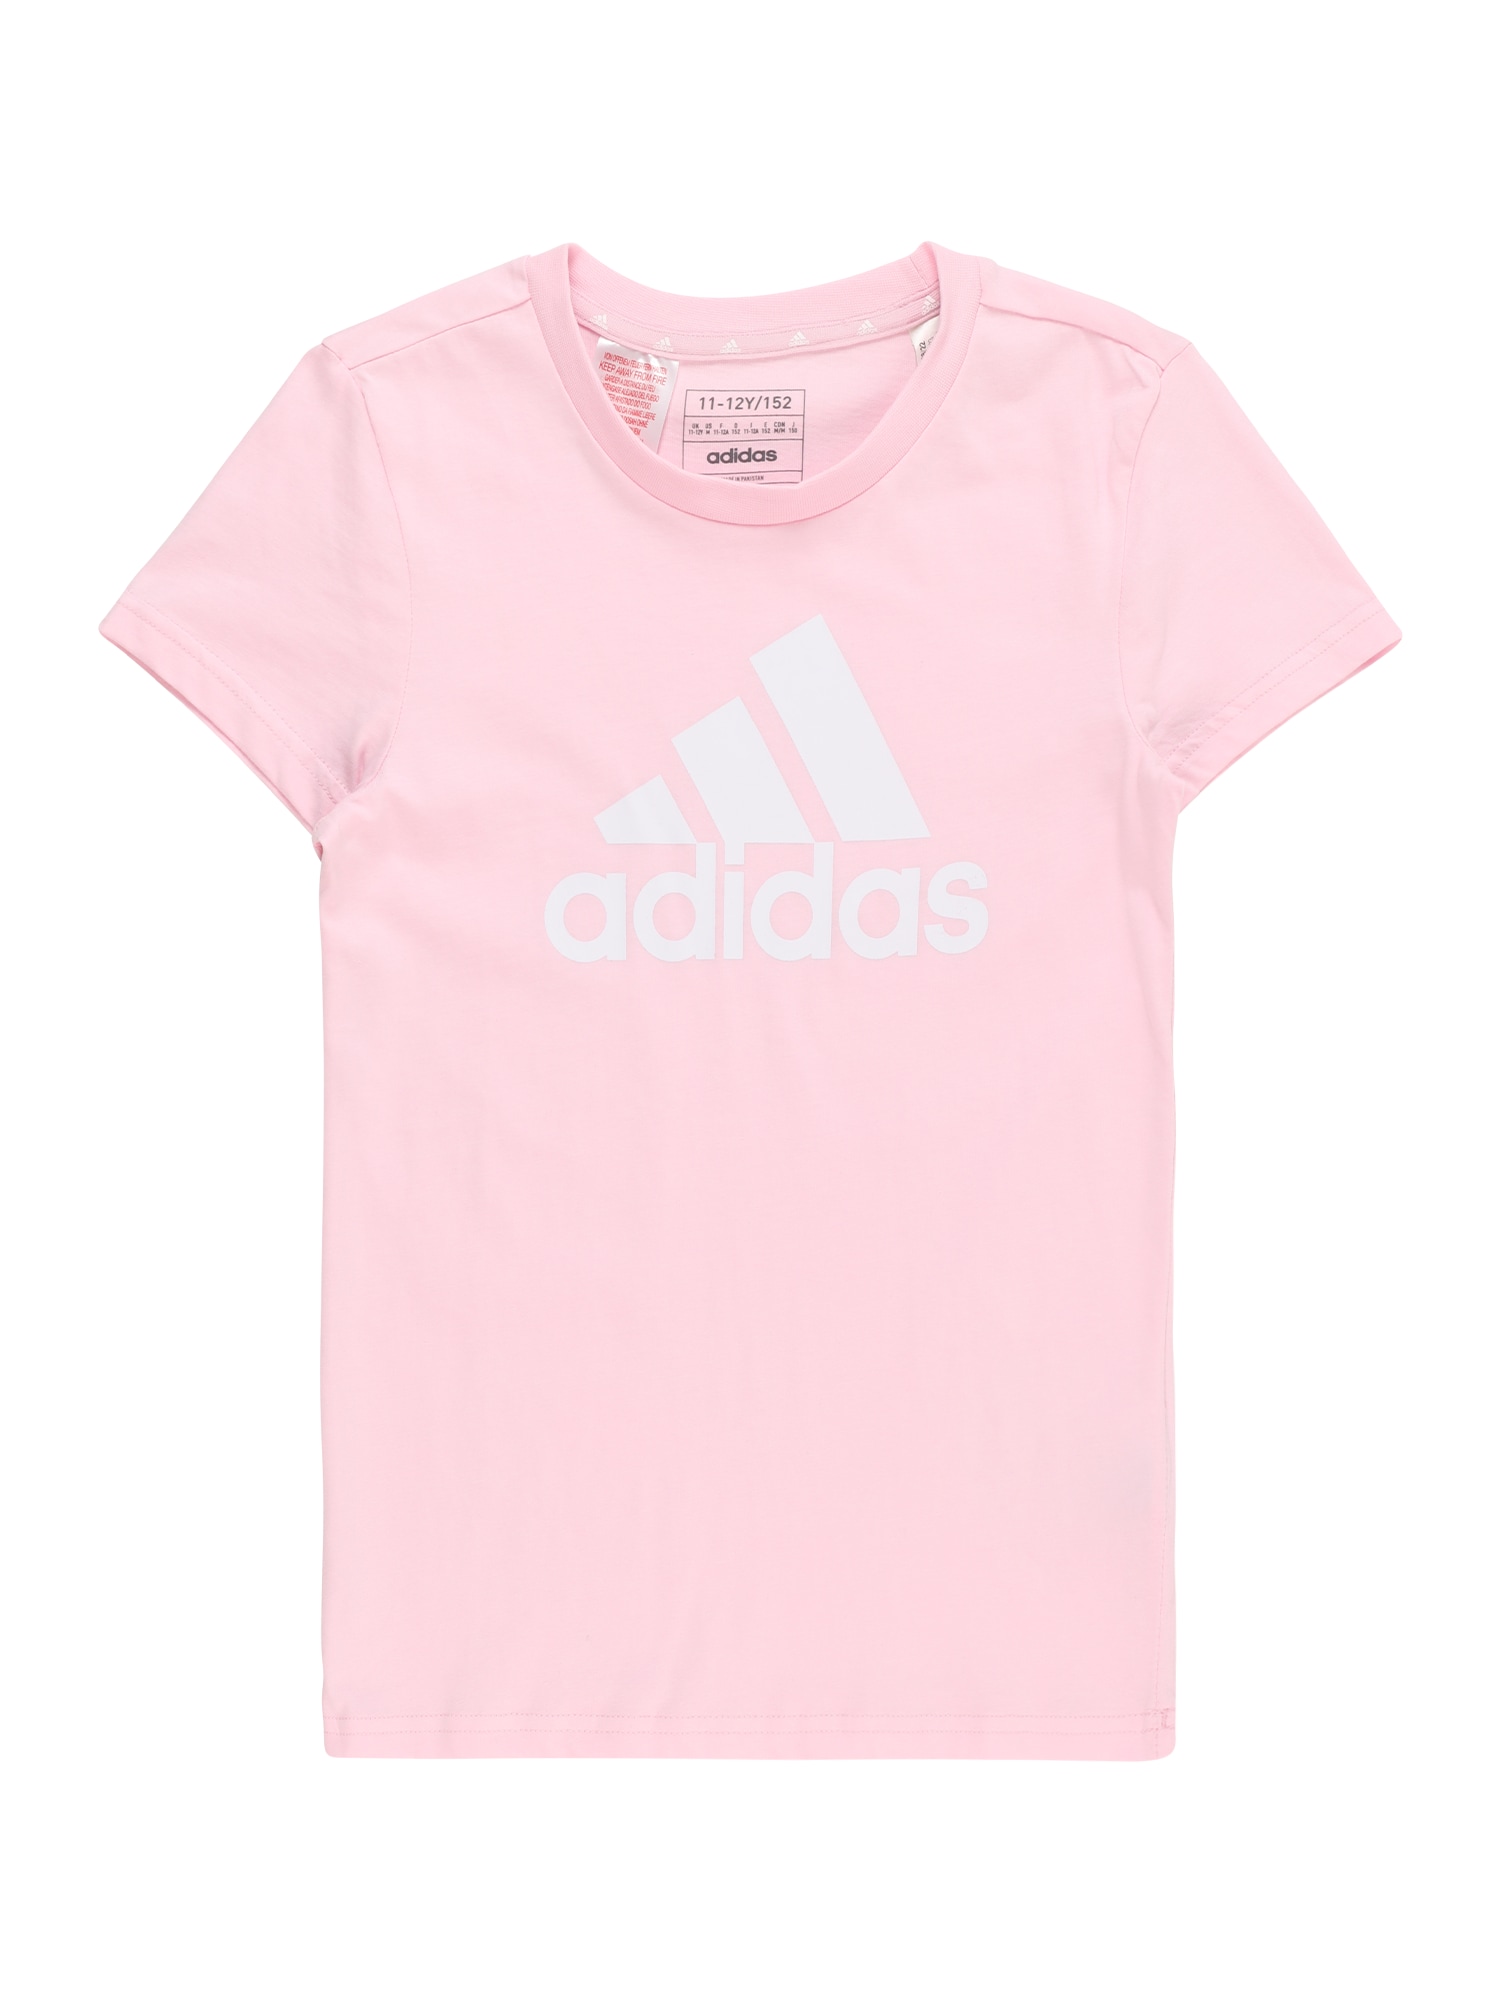 ADIDAS PERFORMANCE Funkcionalna majica  roza / bela